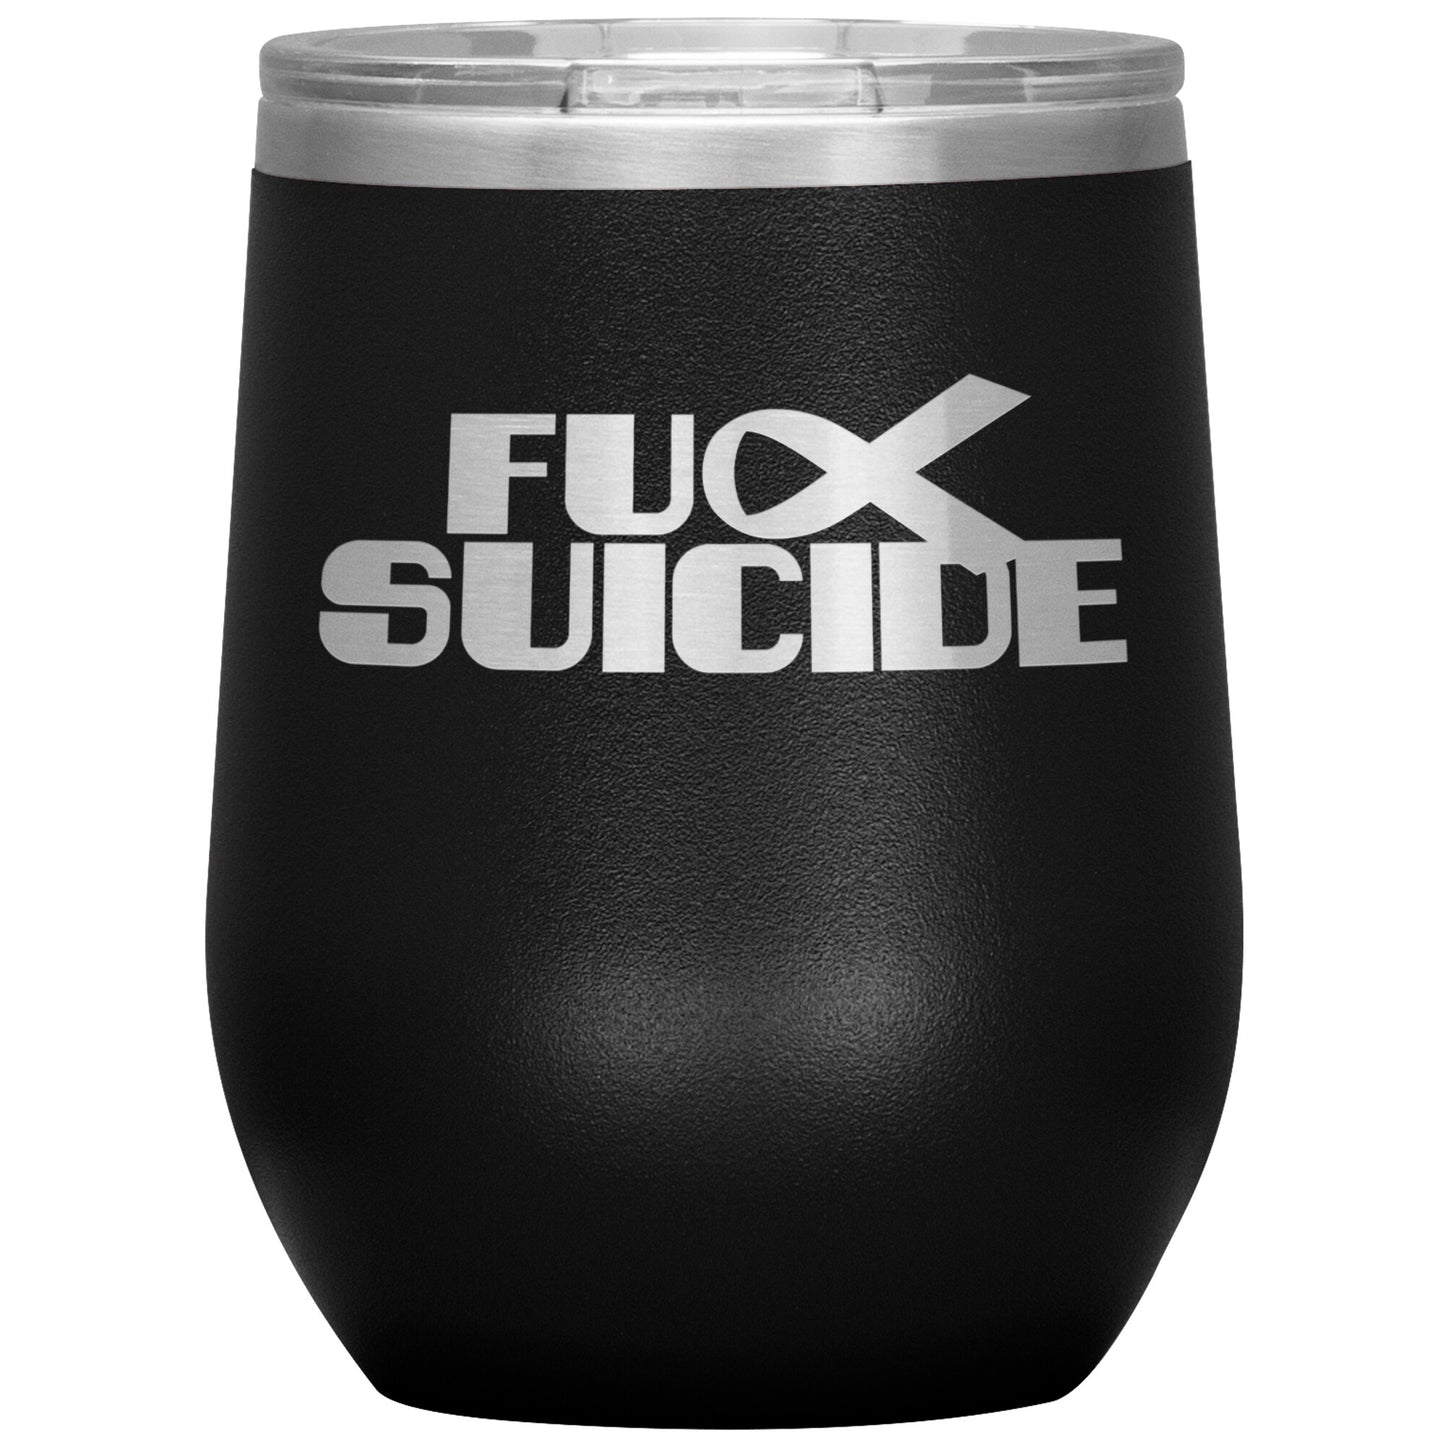 Fu** Suicide 12oz Wine Insulated Tumbler